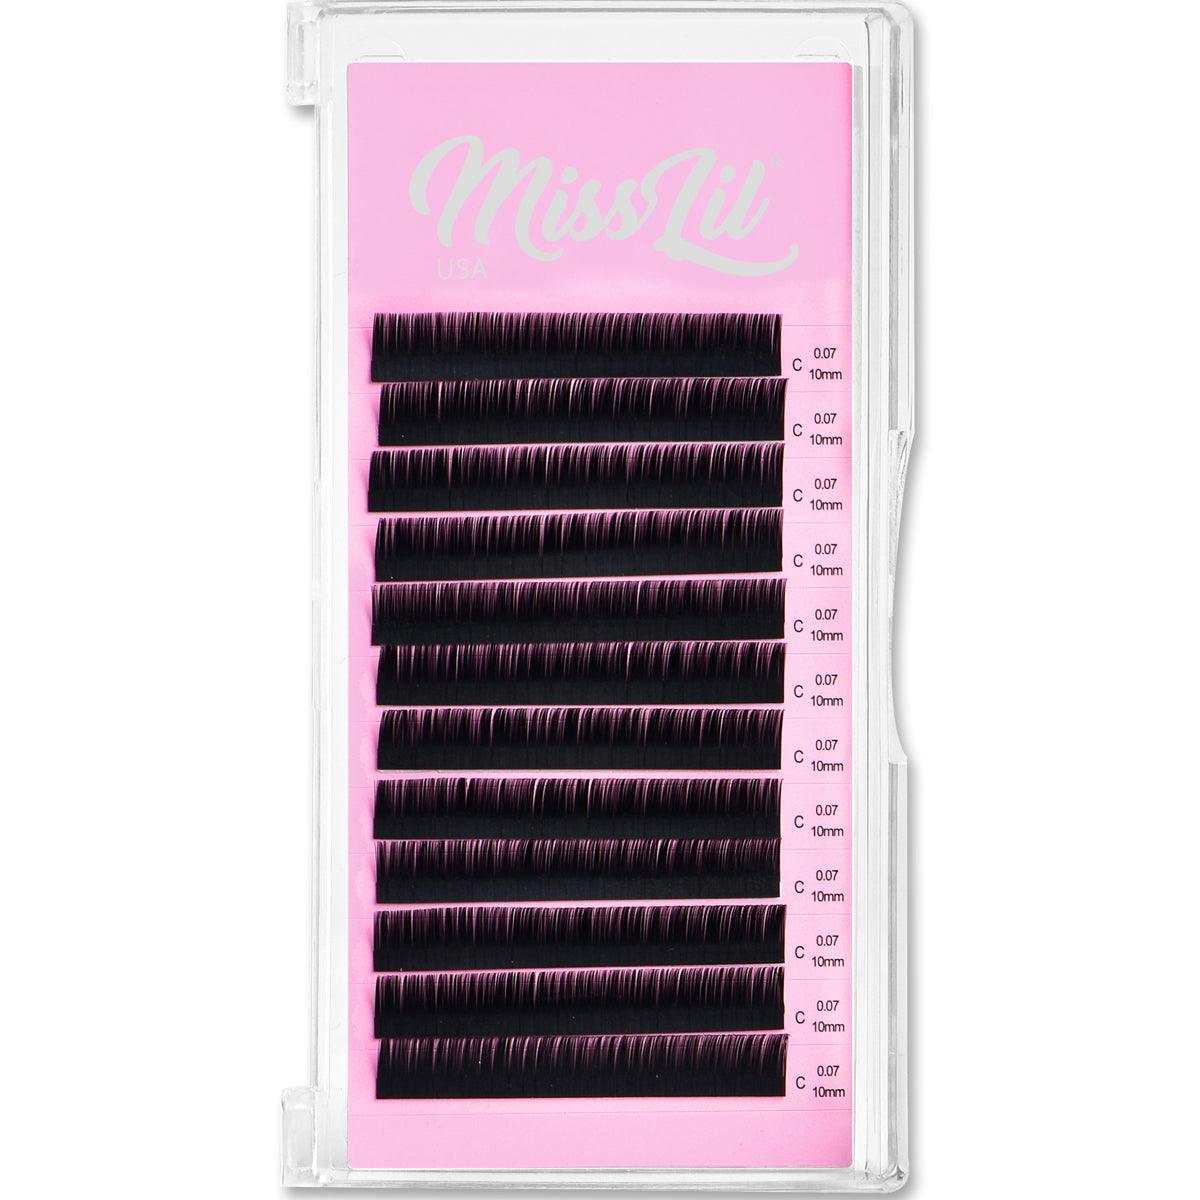 0.07 10mm C Curl Lash Extensions - Miss Lil USA Wholesale